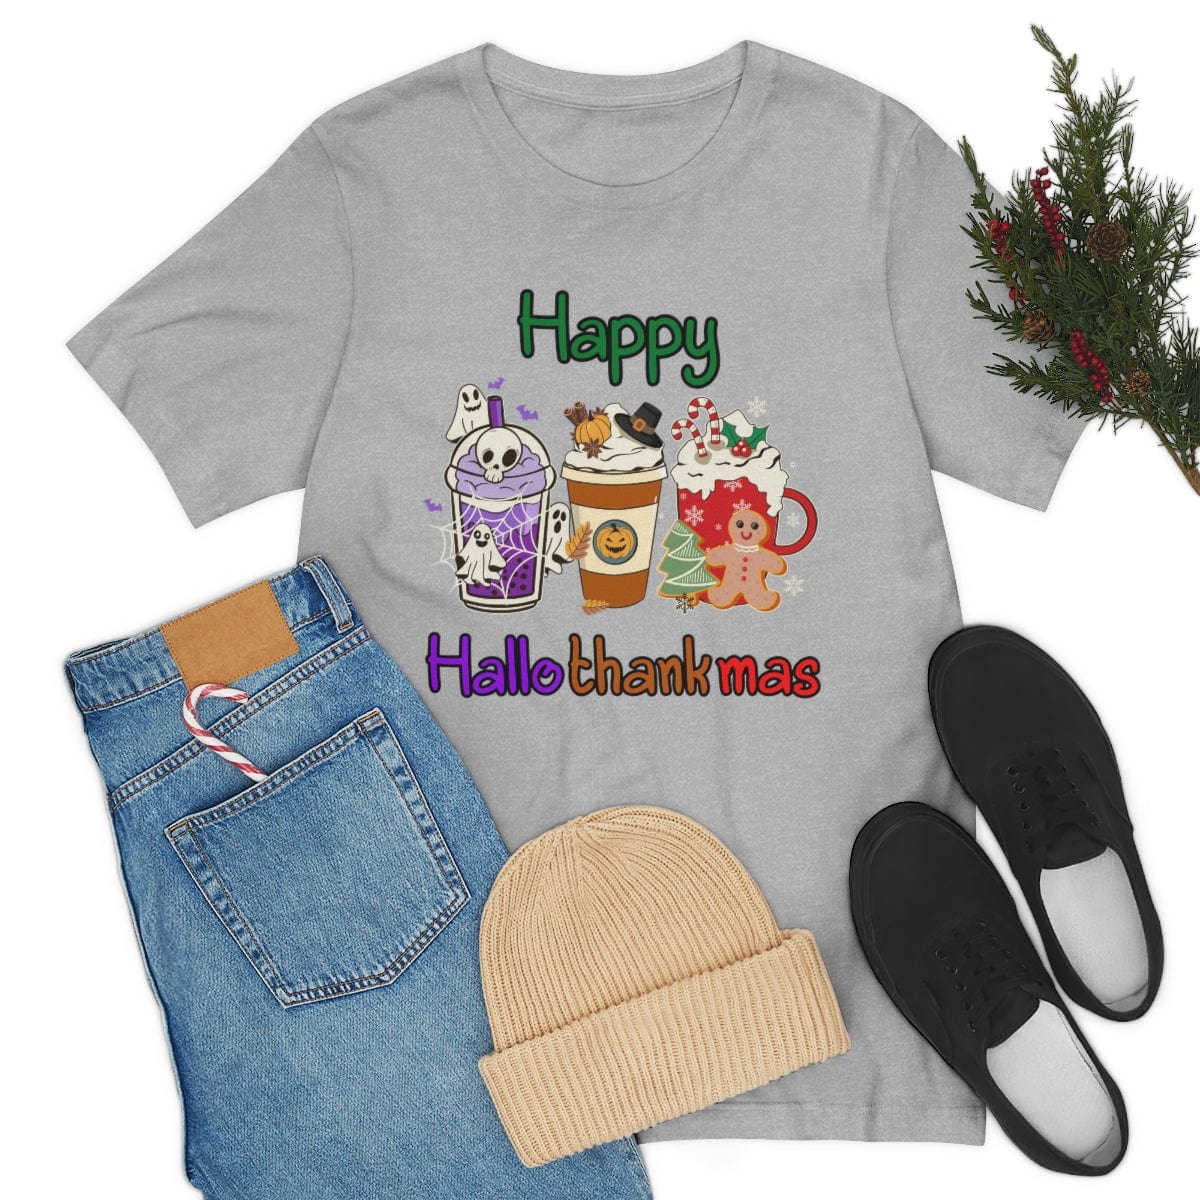 Printify T-Shirt Holiday Shirt, Hallothankmas with coffee shirt, Graphic Tee, Cute Shirts, Christmas Shirt